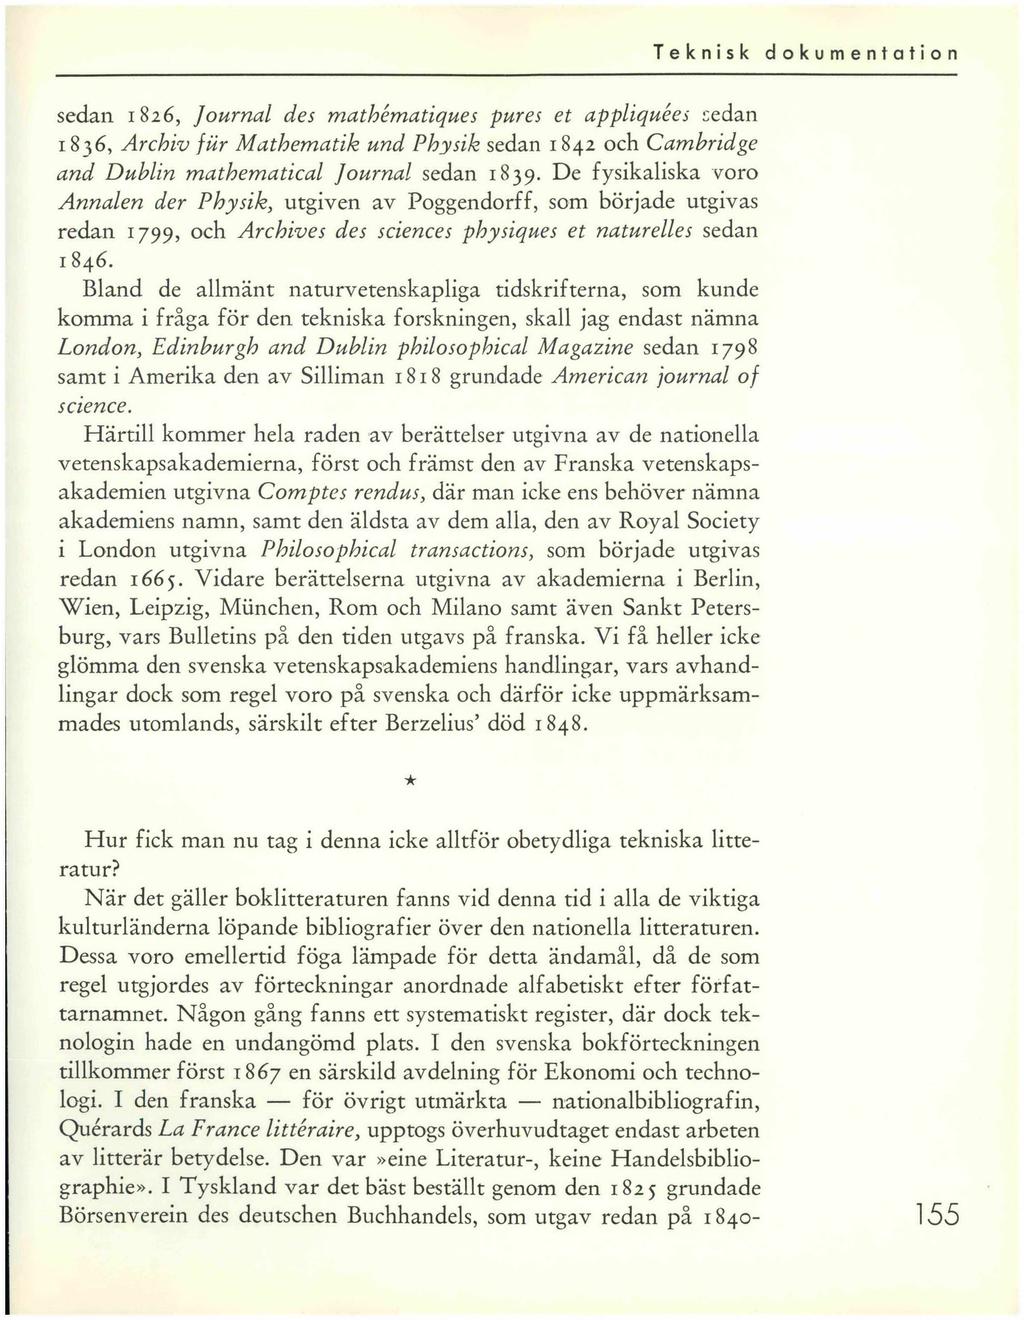 sedan 1826, Journal des mathématiques pures et appliquées sedan 1836, Archiv fiir Mathematik und Physik sedan 1842 och Cambridge and Dublin mathematical Journal sedan 1839.